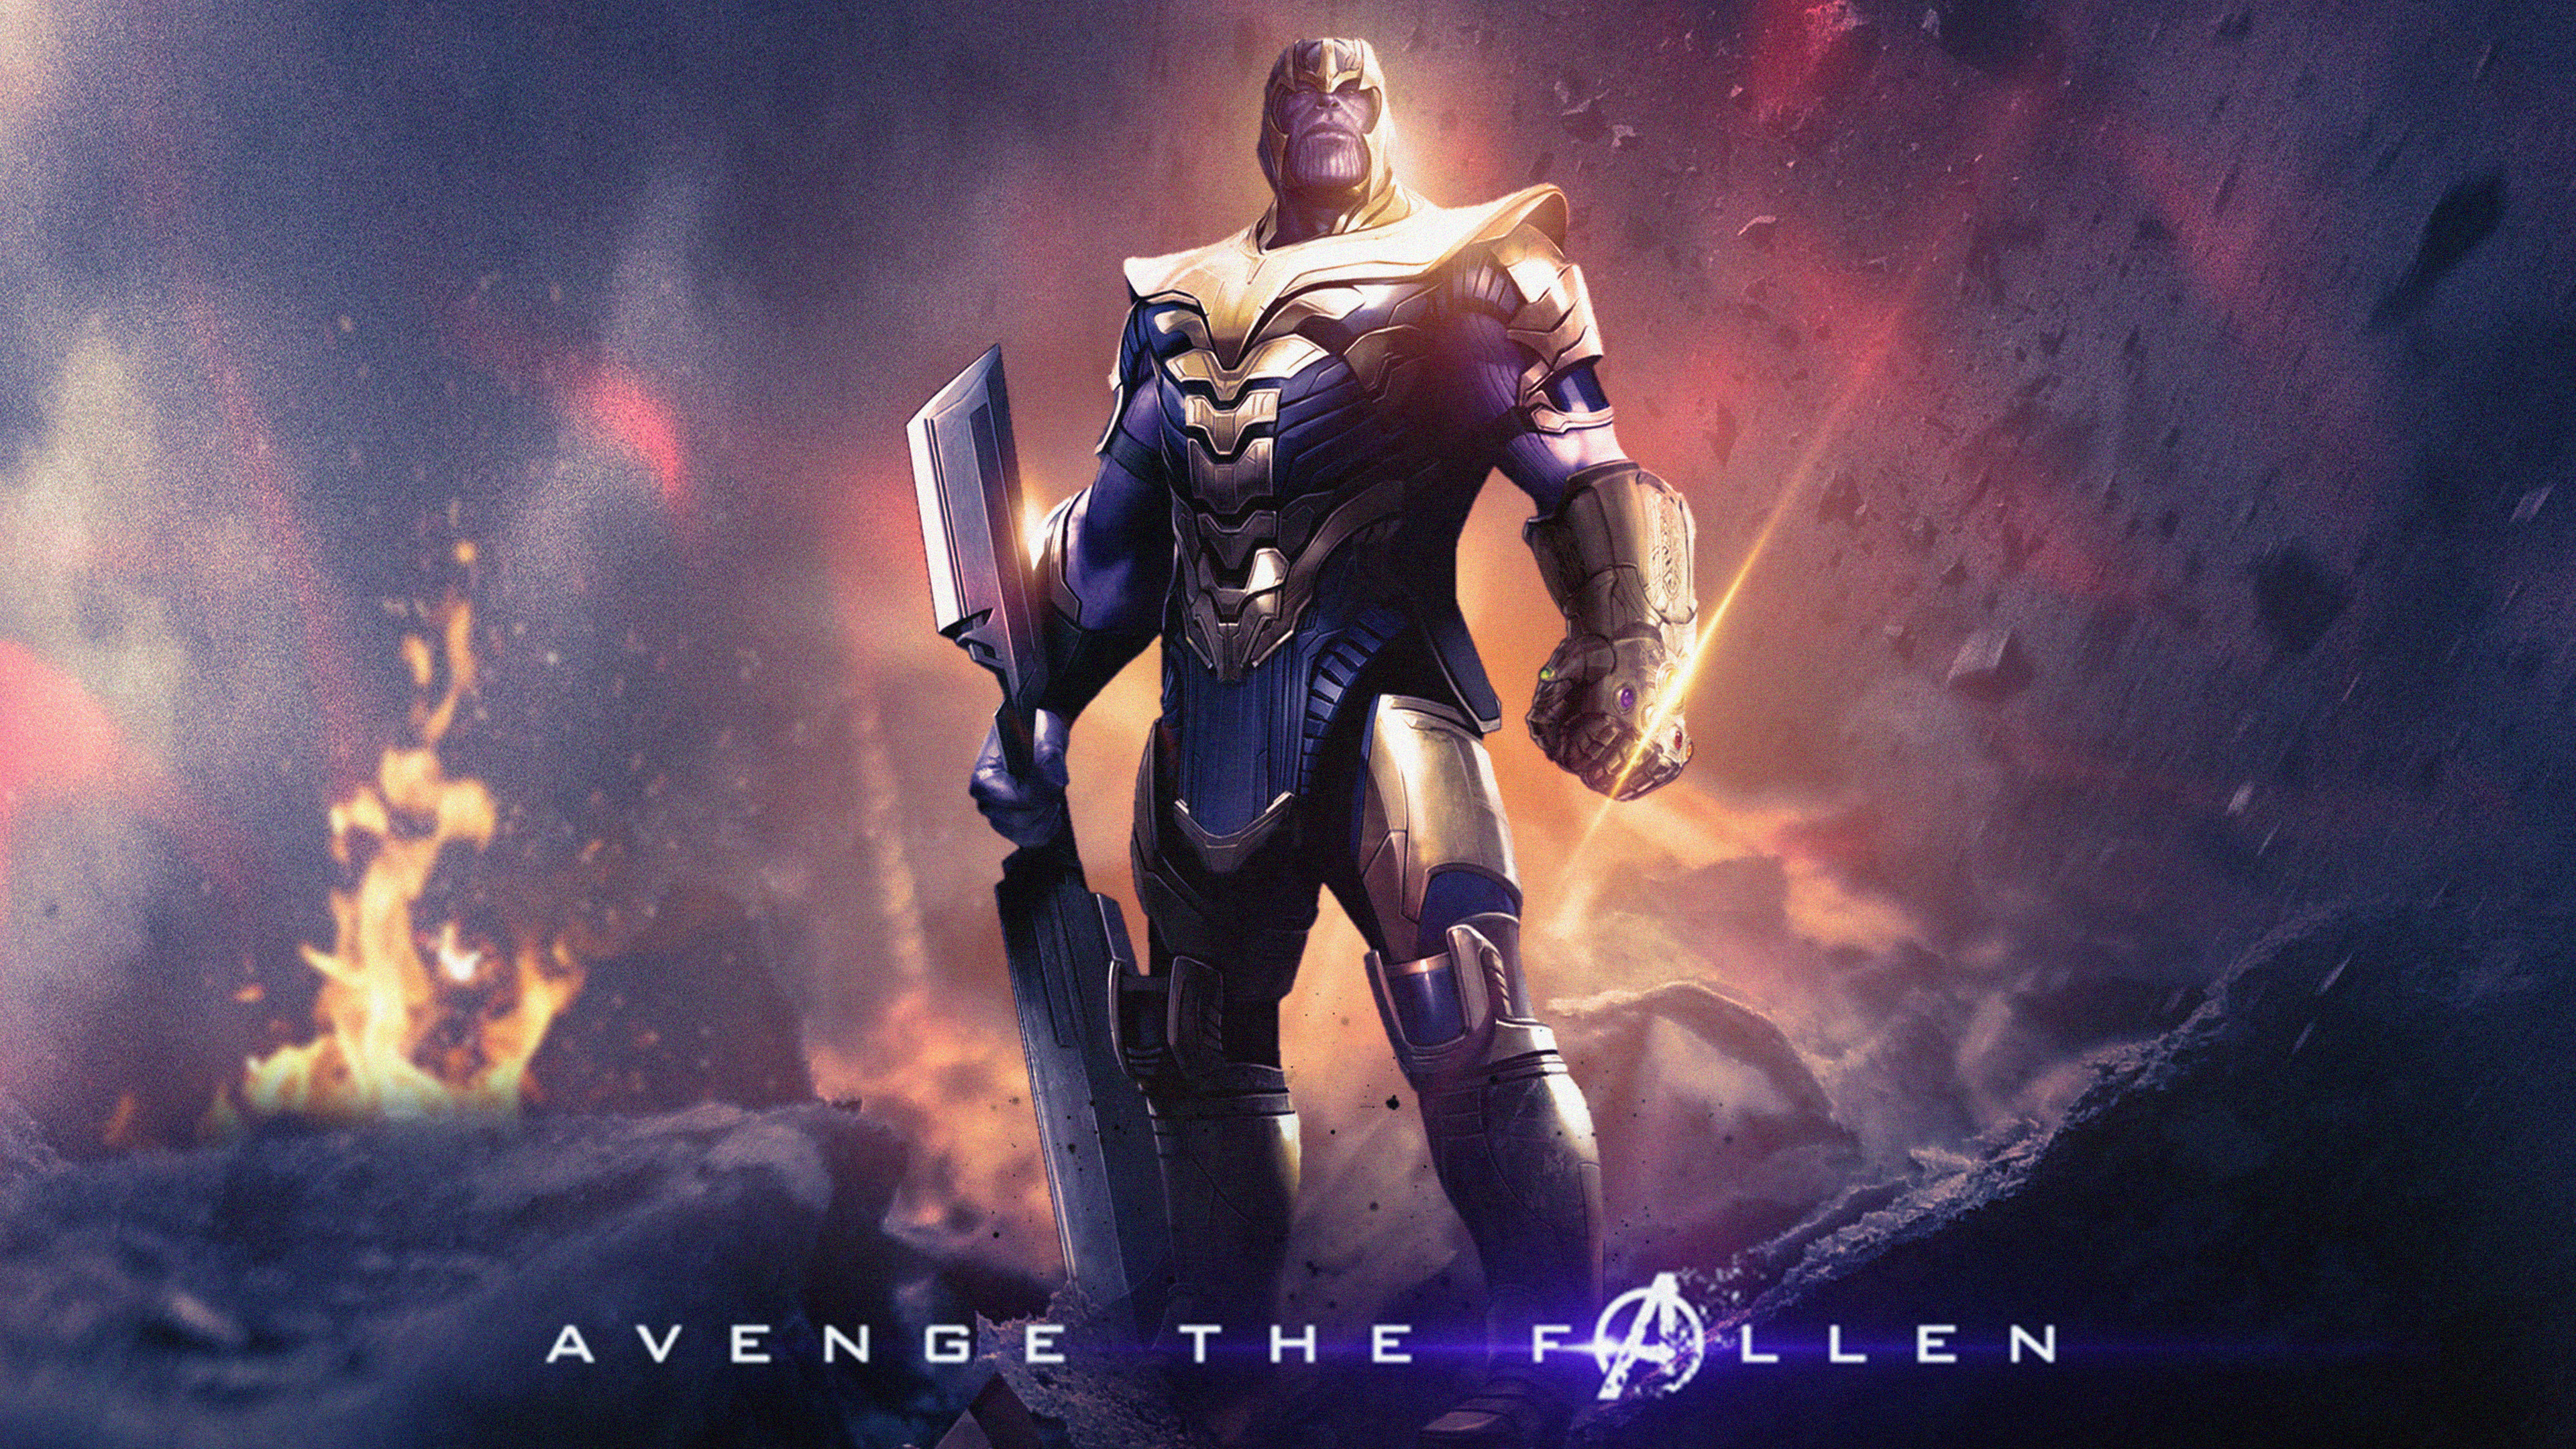 Armor Avengers Endgame Infinity Gauntlet Sword Thanos 3840x2160